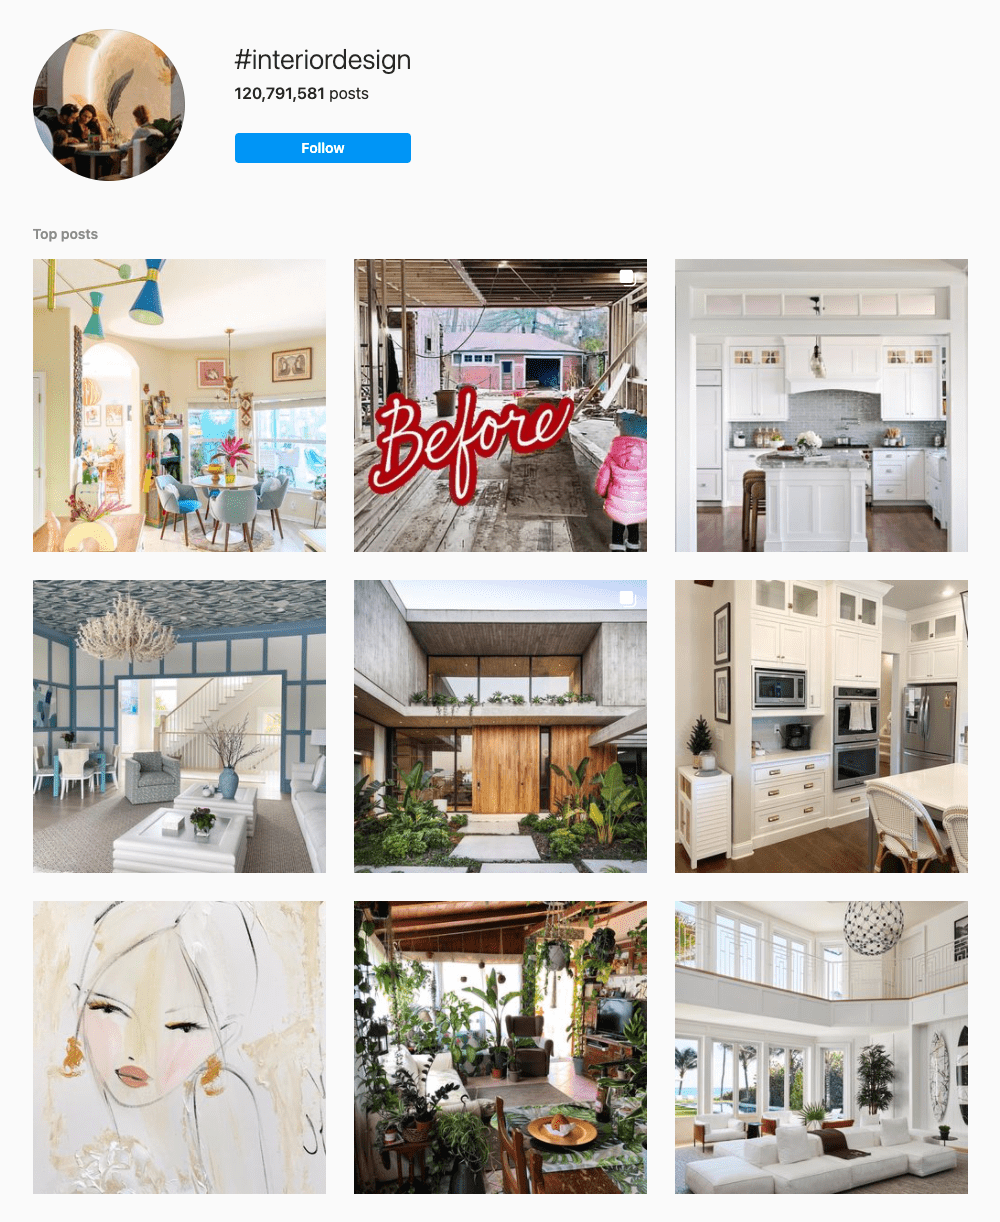 #interiordesign Hashtags for Instagram